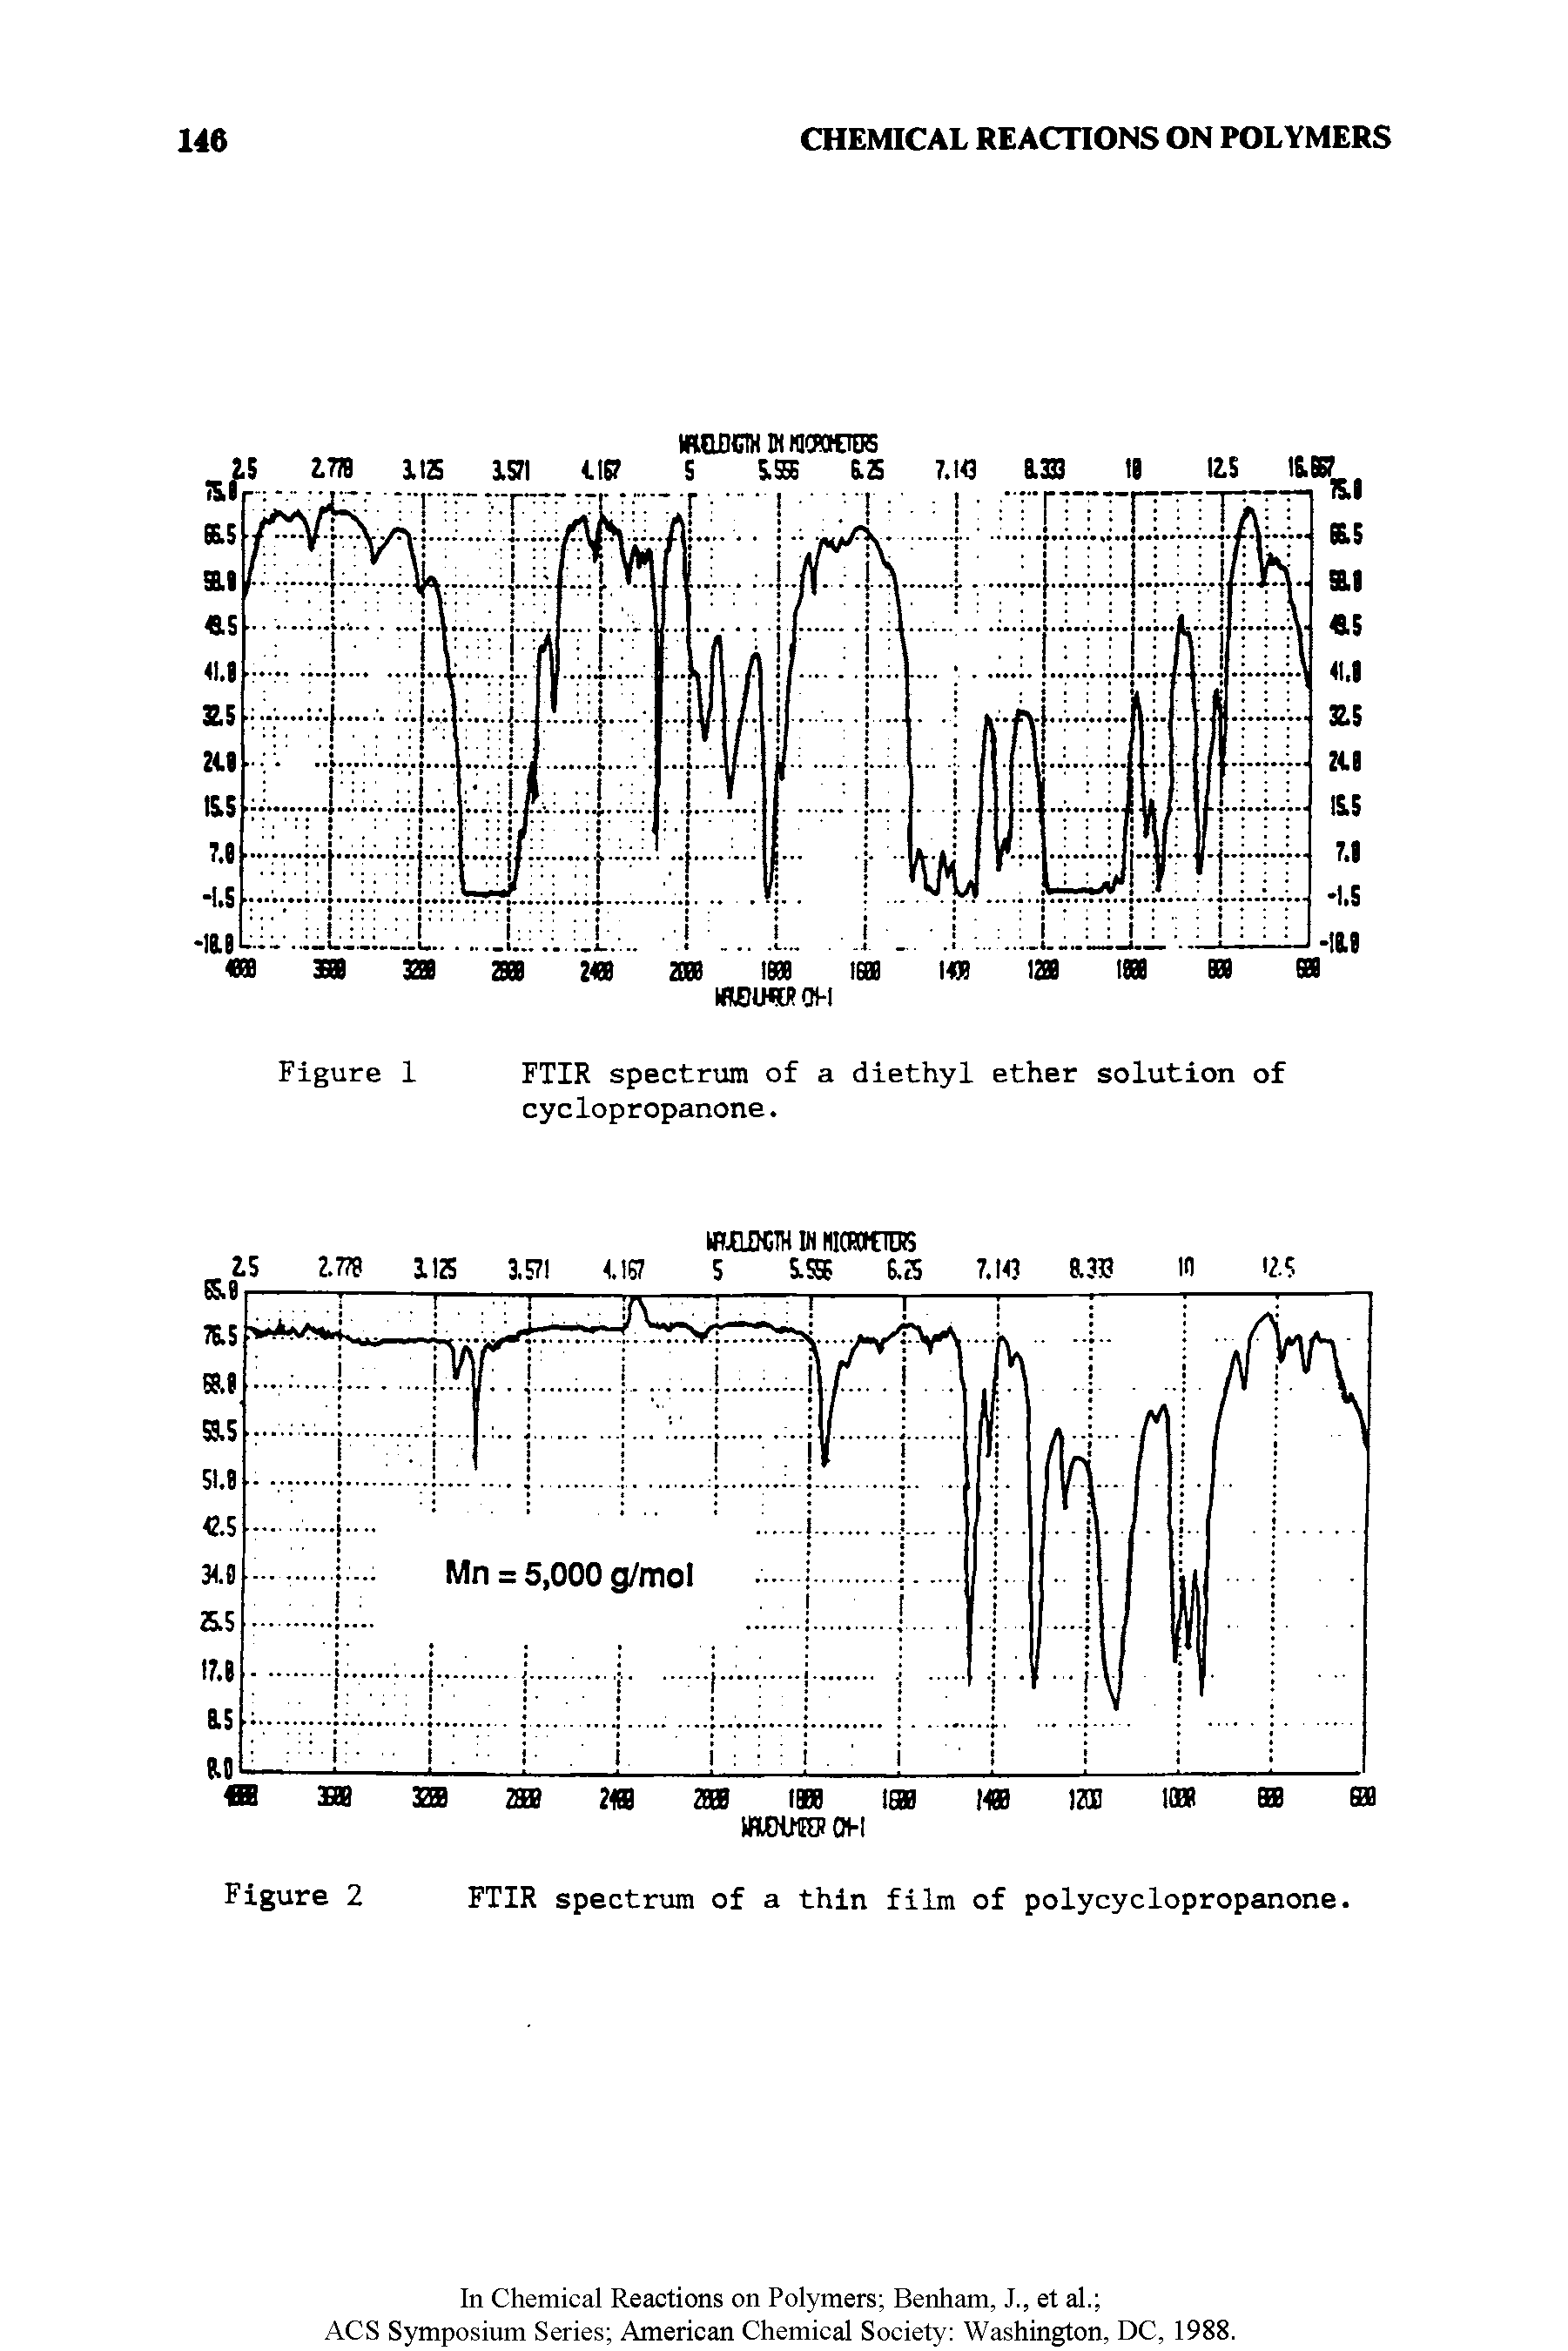 Figure 2 FTIR spectrum of a thin film of polycyclopropanone.